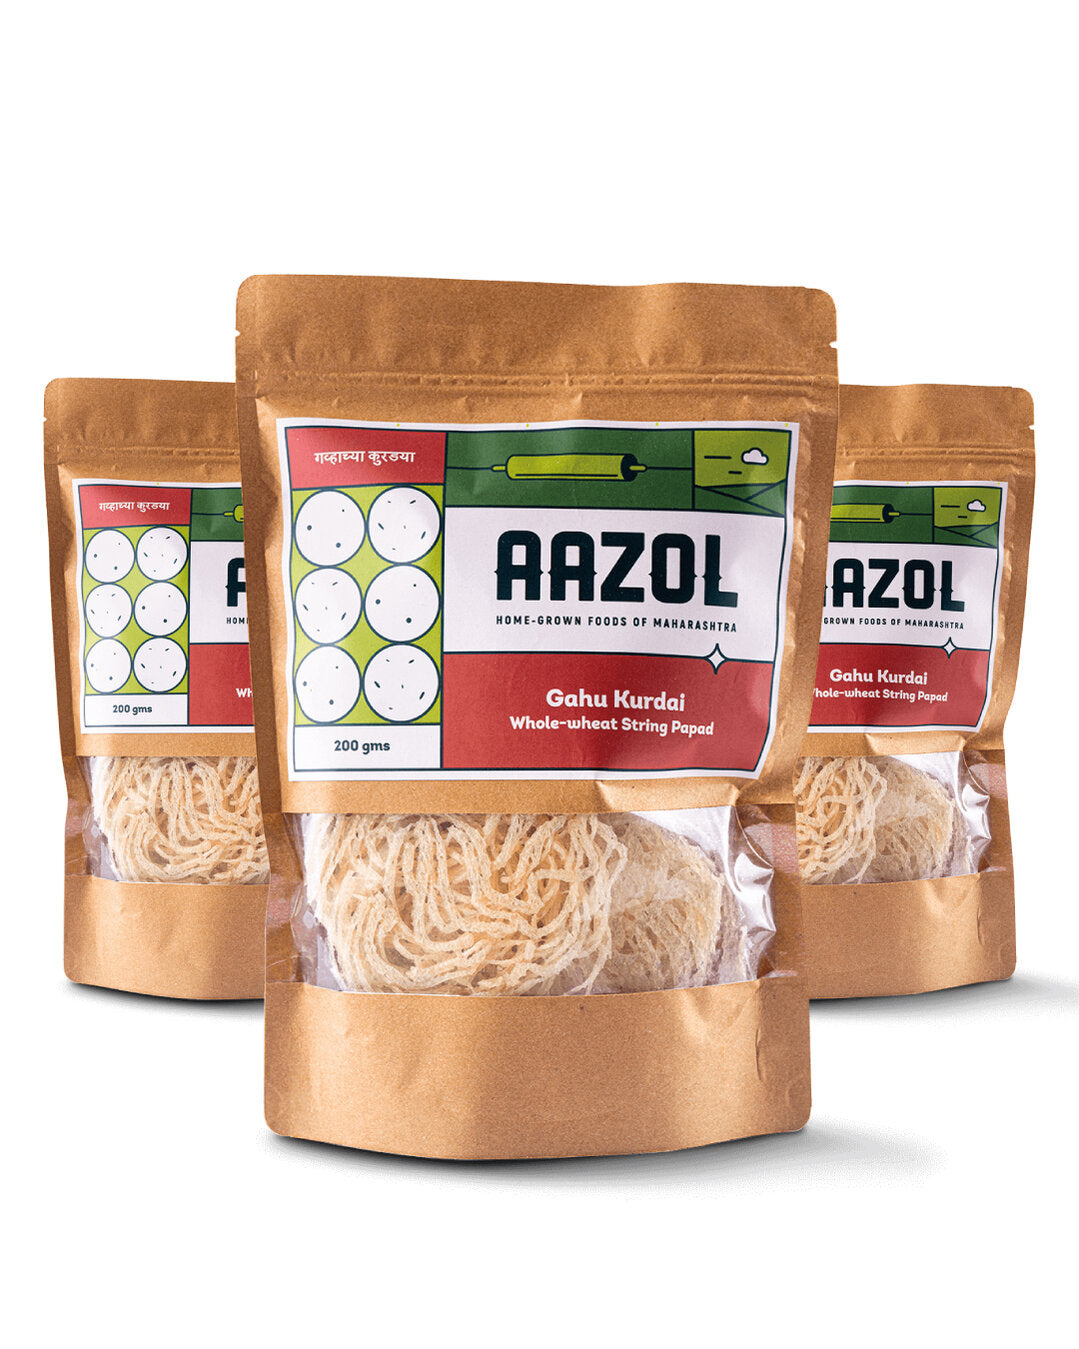 Aazol Gahu Kurdai: Whole-wheat String Papad (Pack of 3) 600g - hfnl!fe